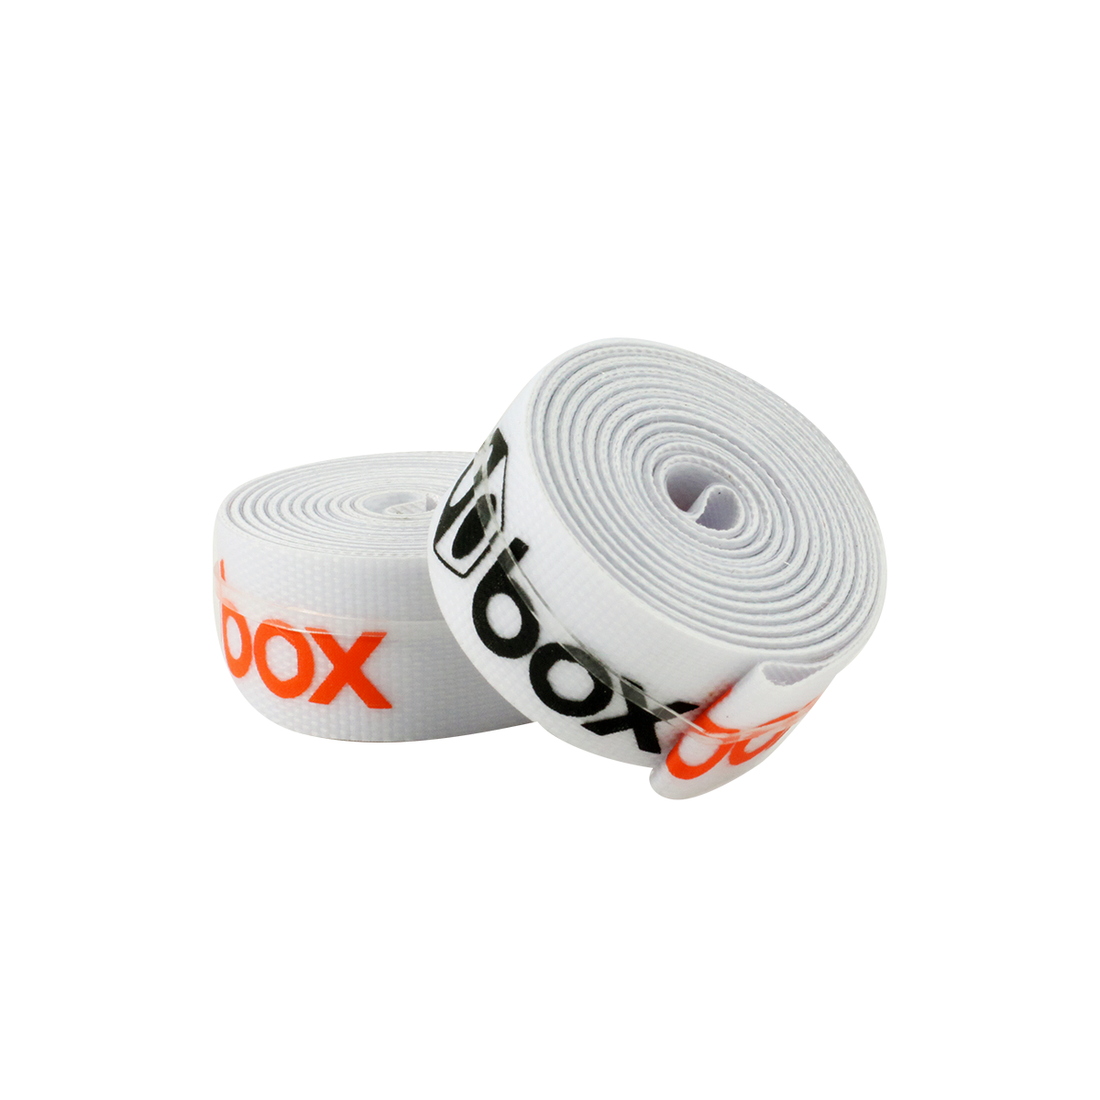 BOX One Rim Tape - boxcomponents